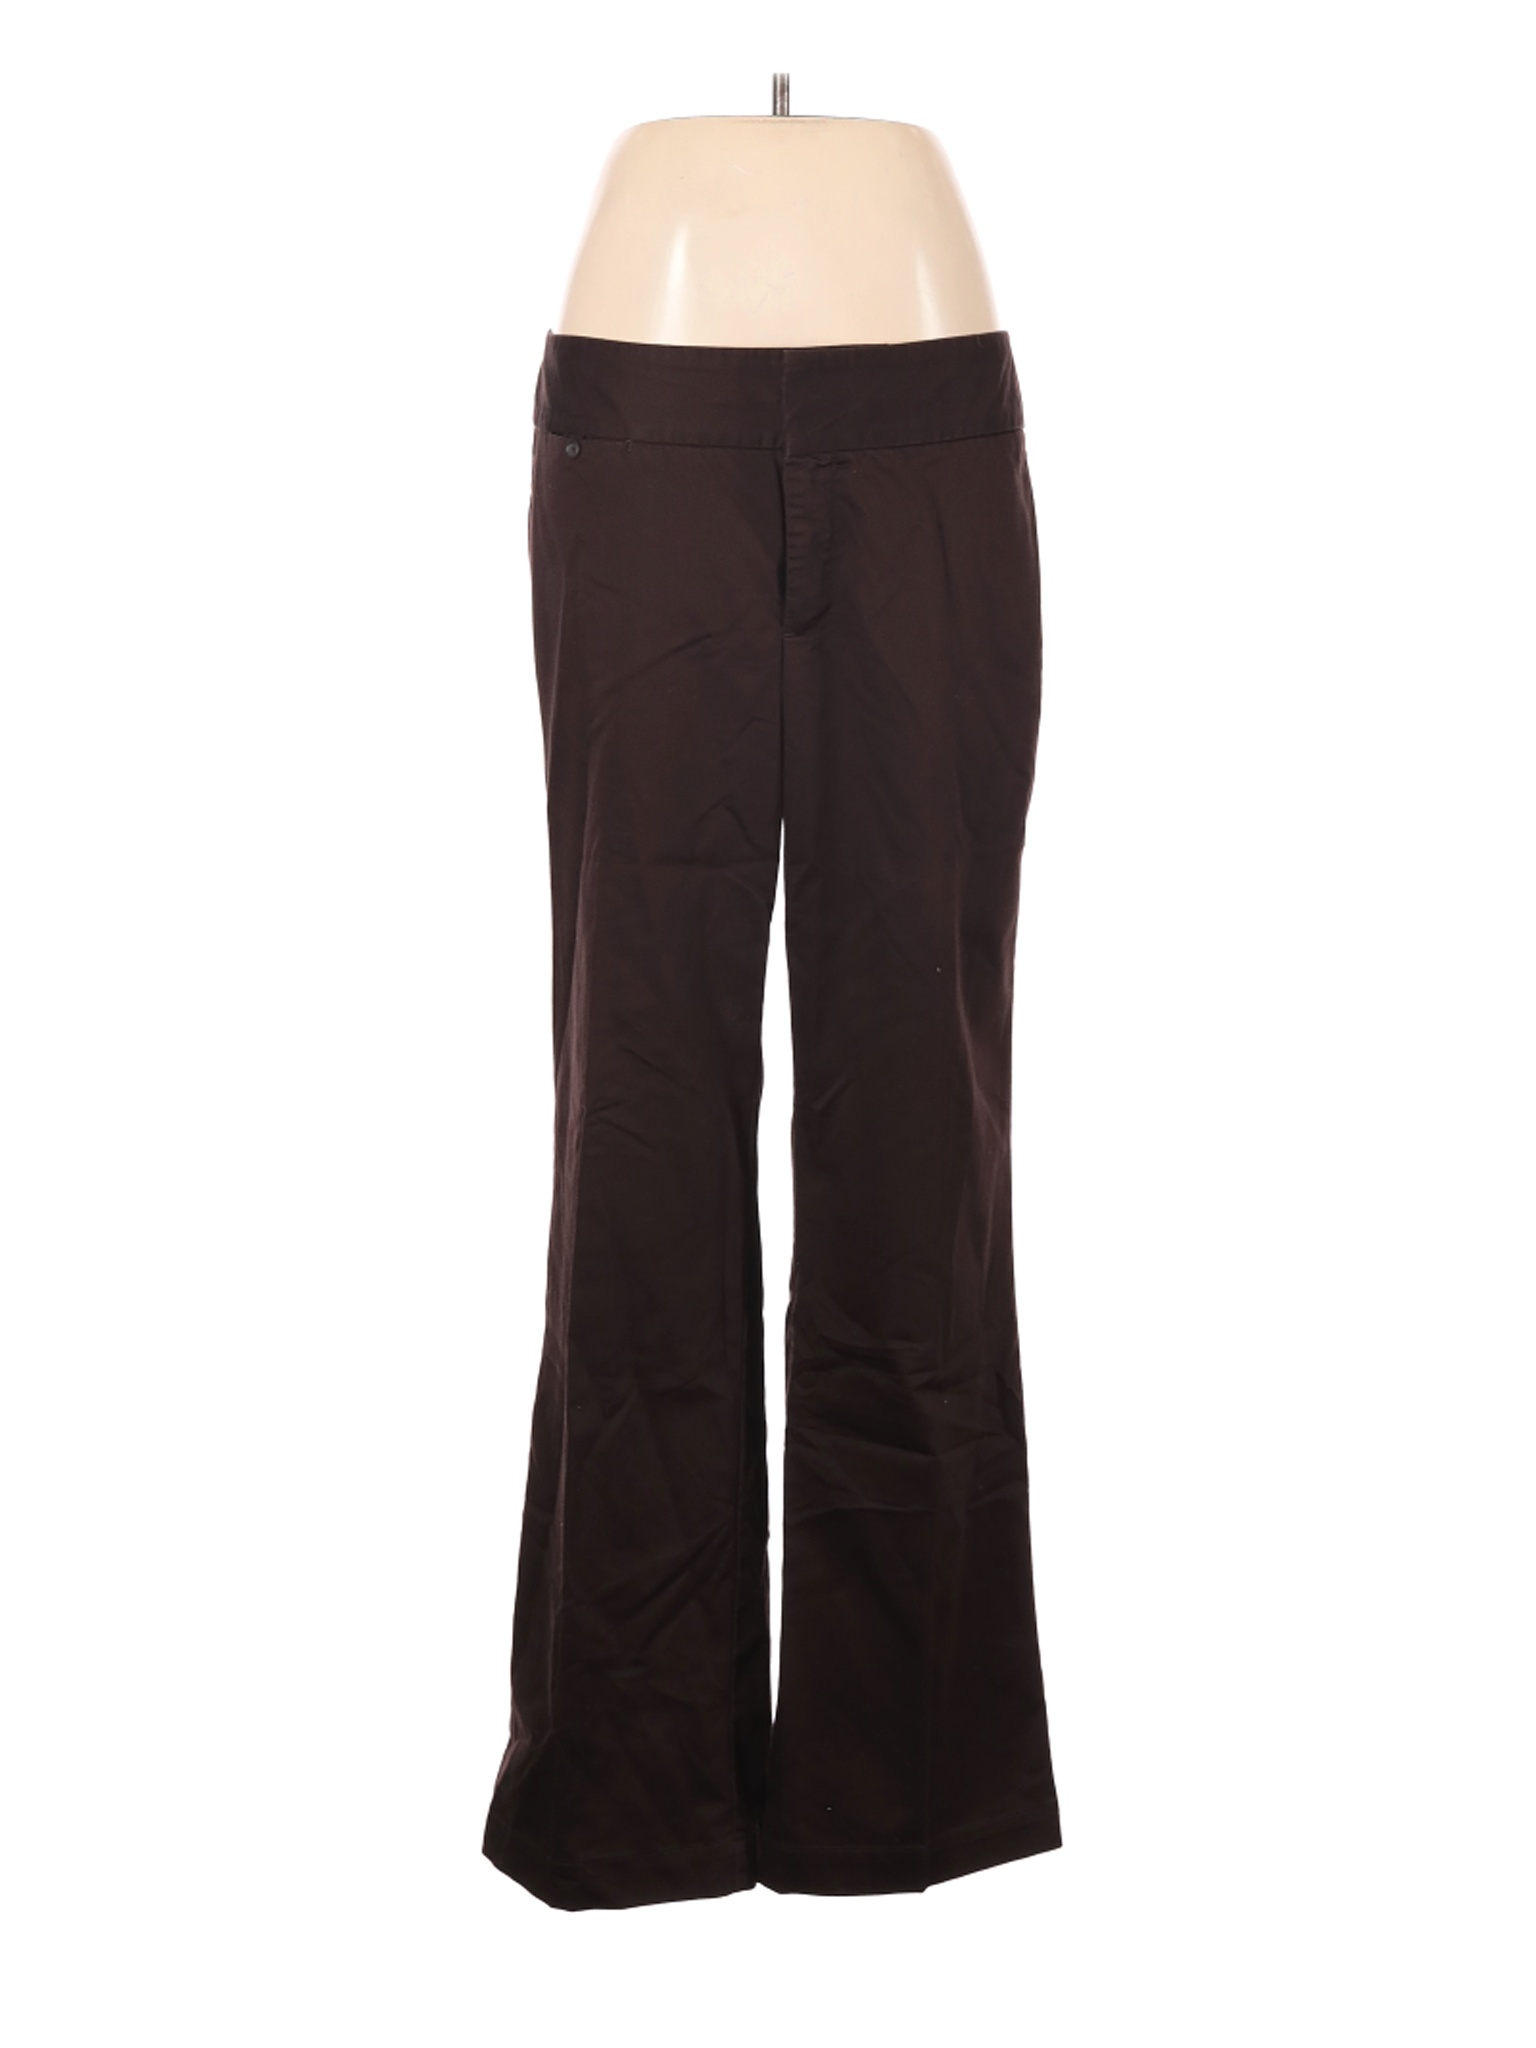 Dockers Women Brown Casual Pants 12 | eBay